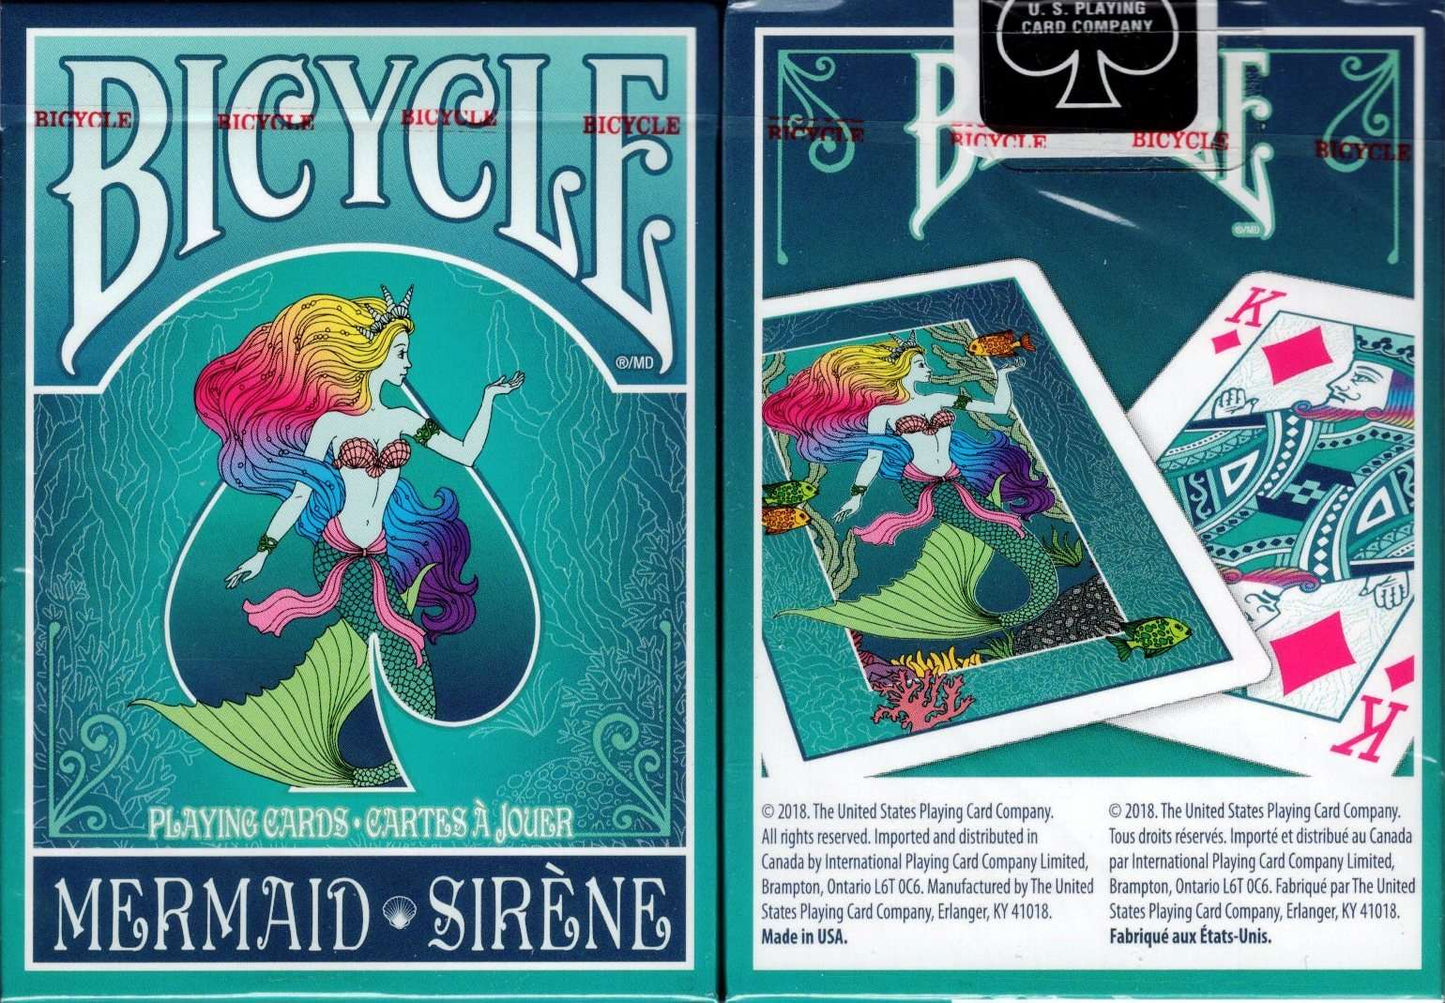 PlayingCardDecks.com-Mermaid Bicycle Playing Cards: Teal